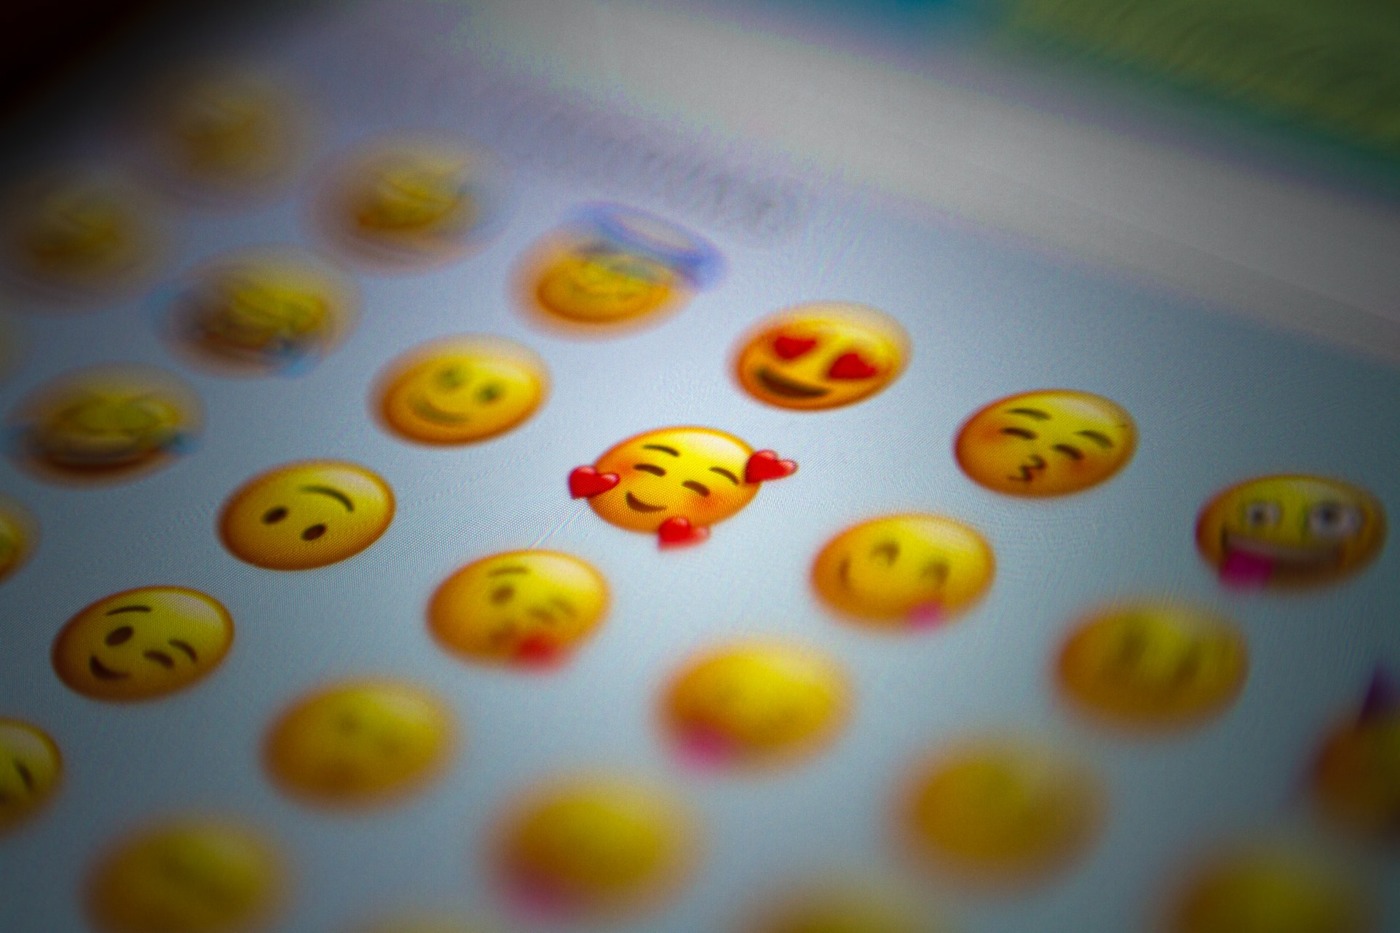 bank of emojis focusing on love heart face